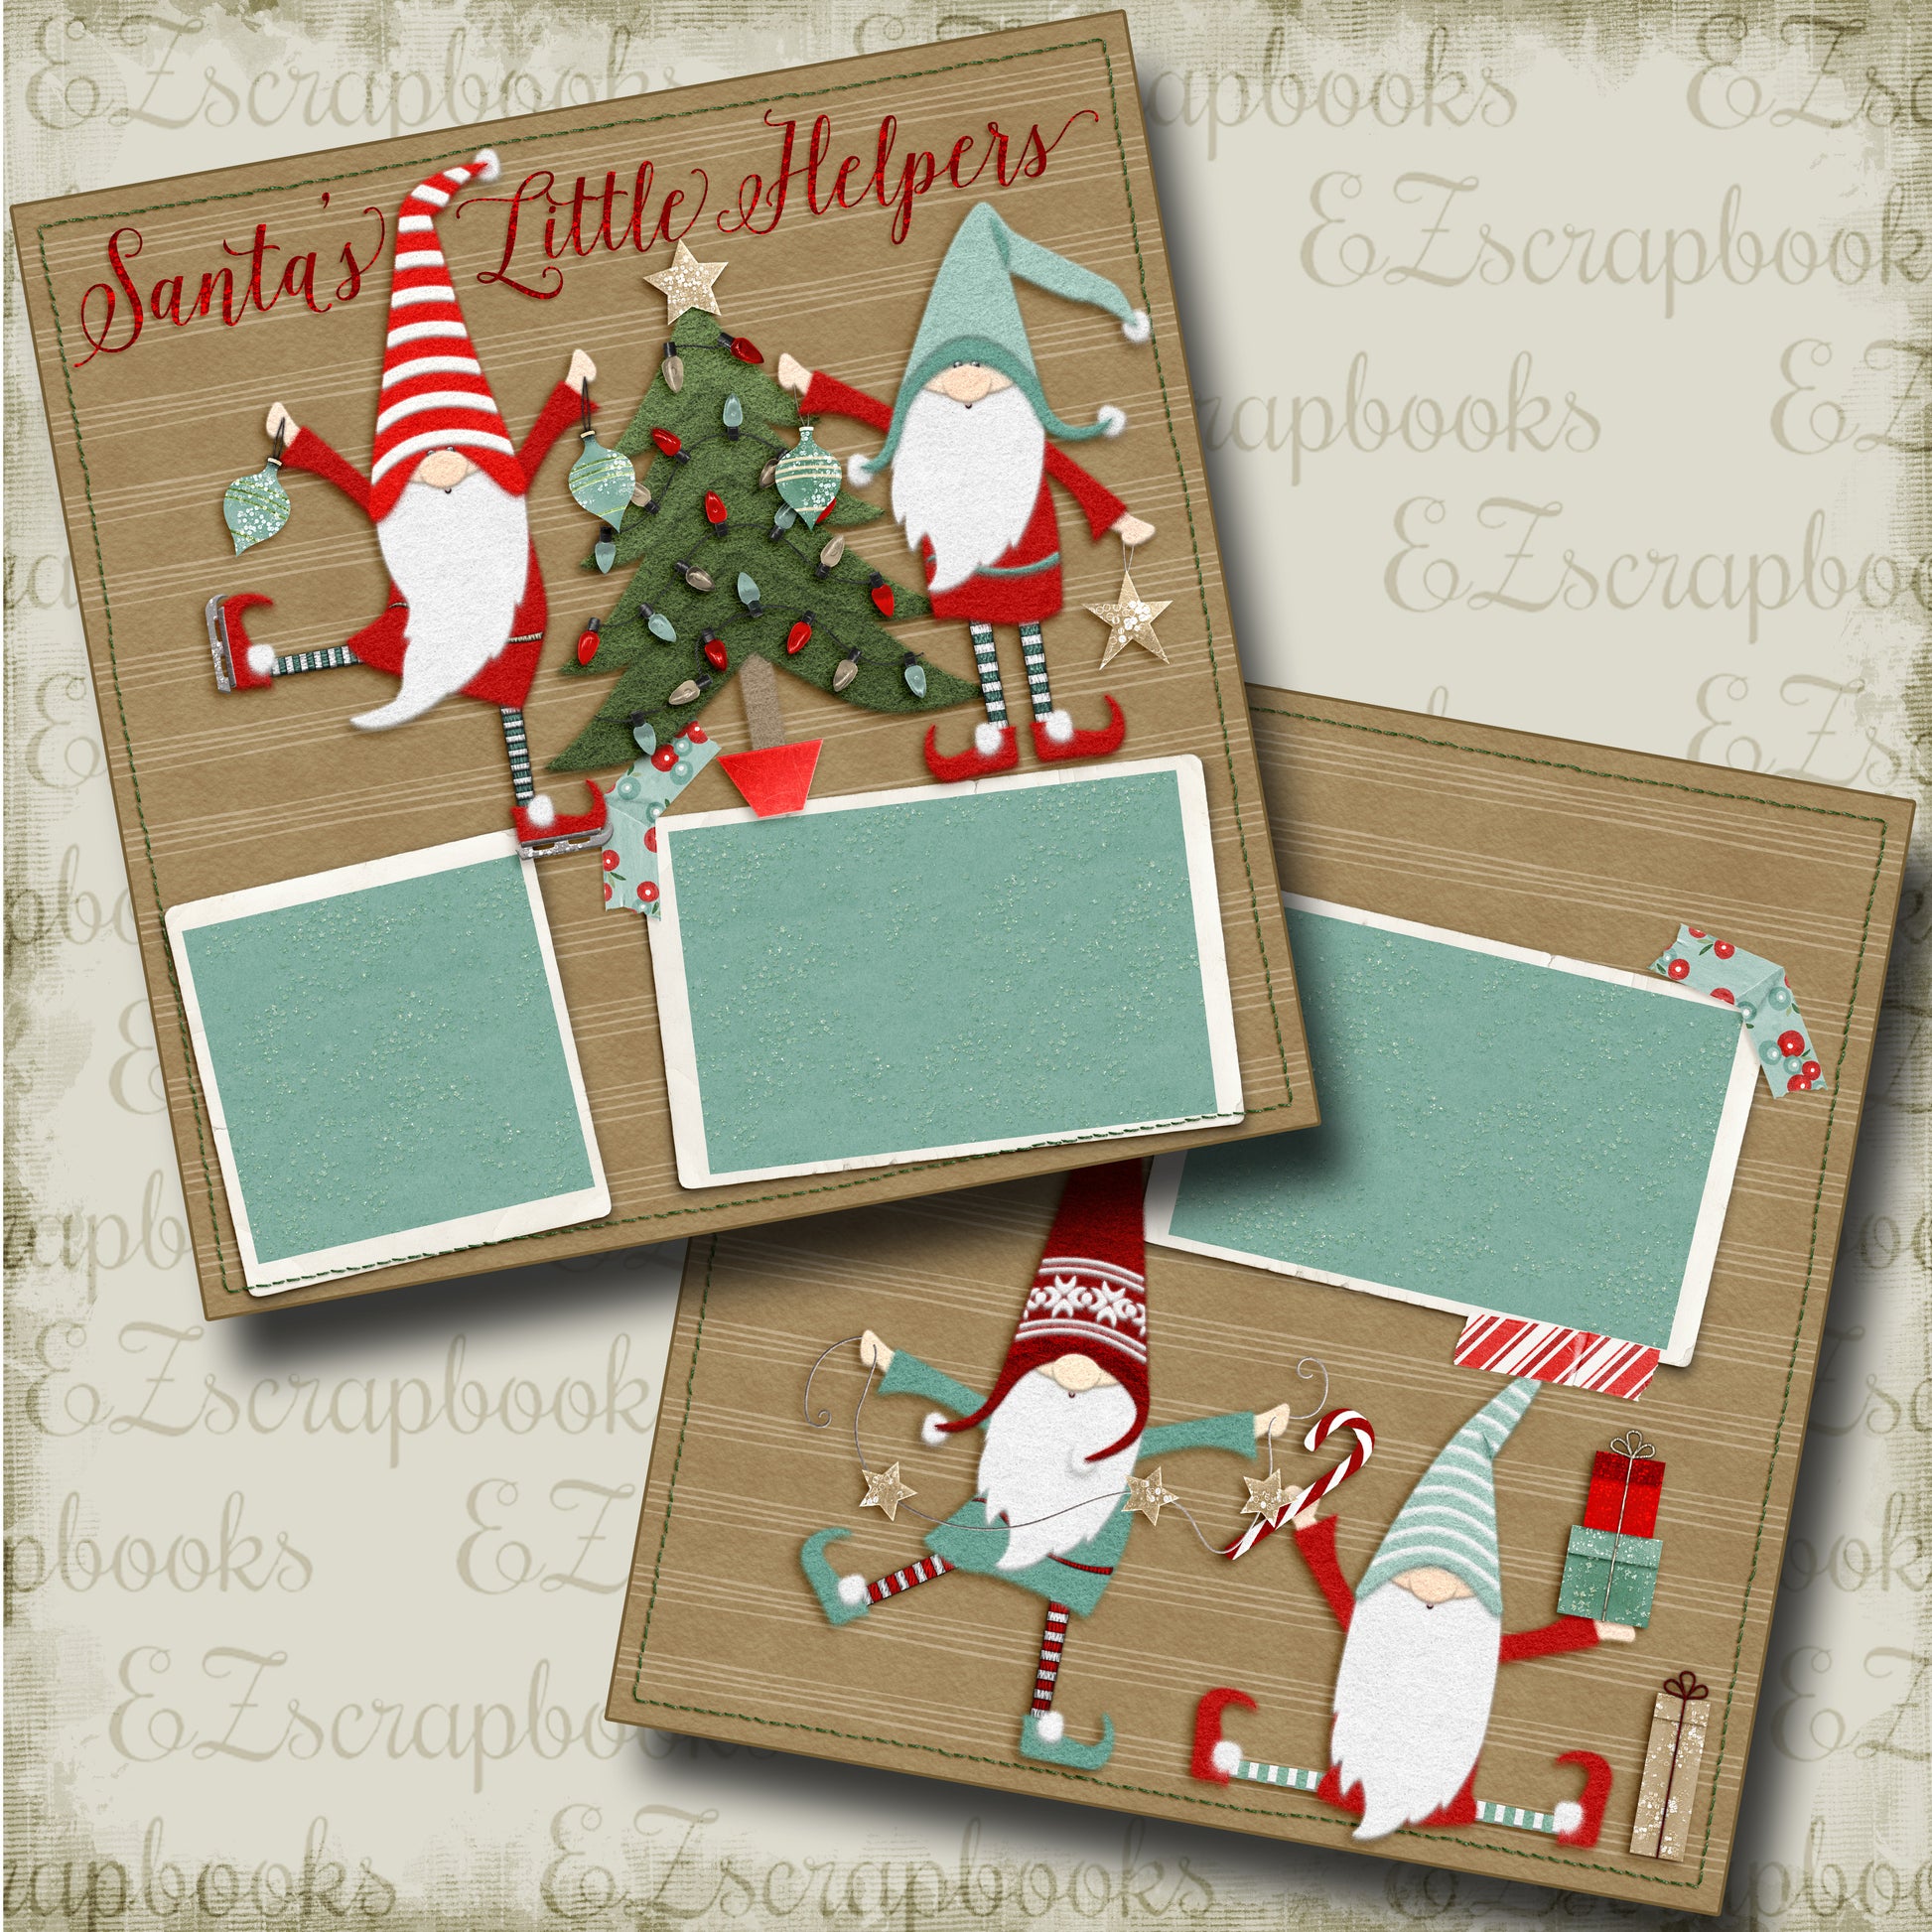 Santa's Little Helpers - 4468 - EZscrapbooks Scrapbook Layouts Christmas